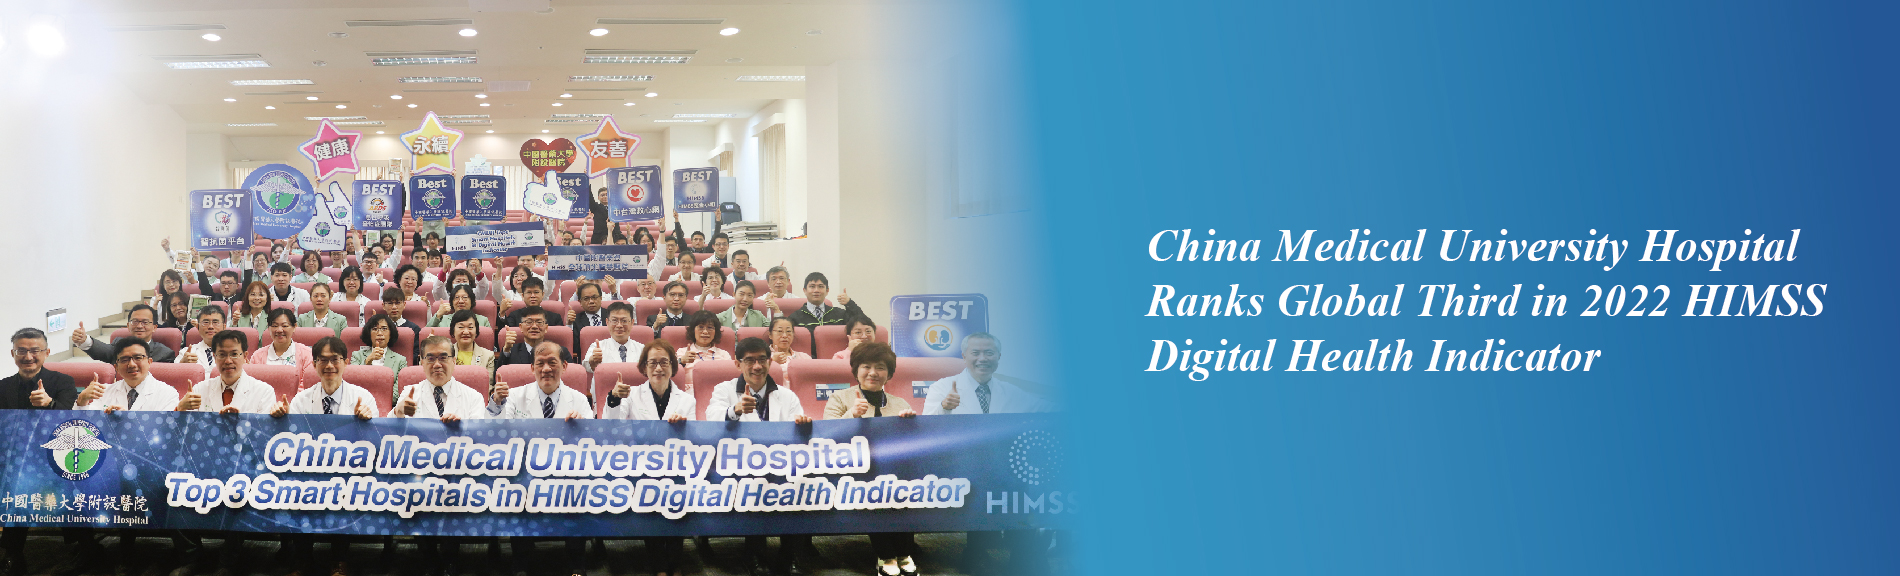 China Medical University Hospital ranks global third in 2022 HIMSS Digital Health Indicator